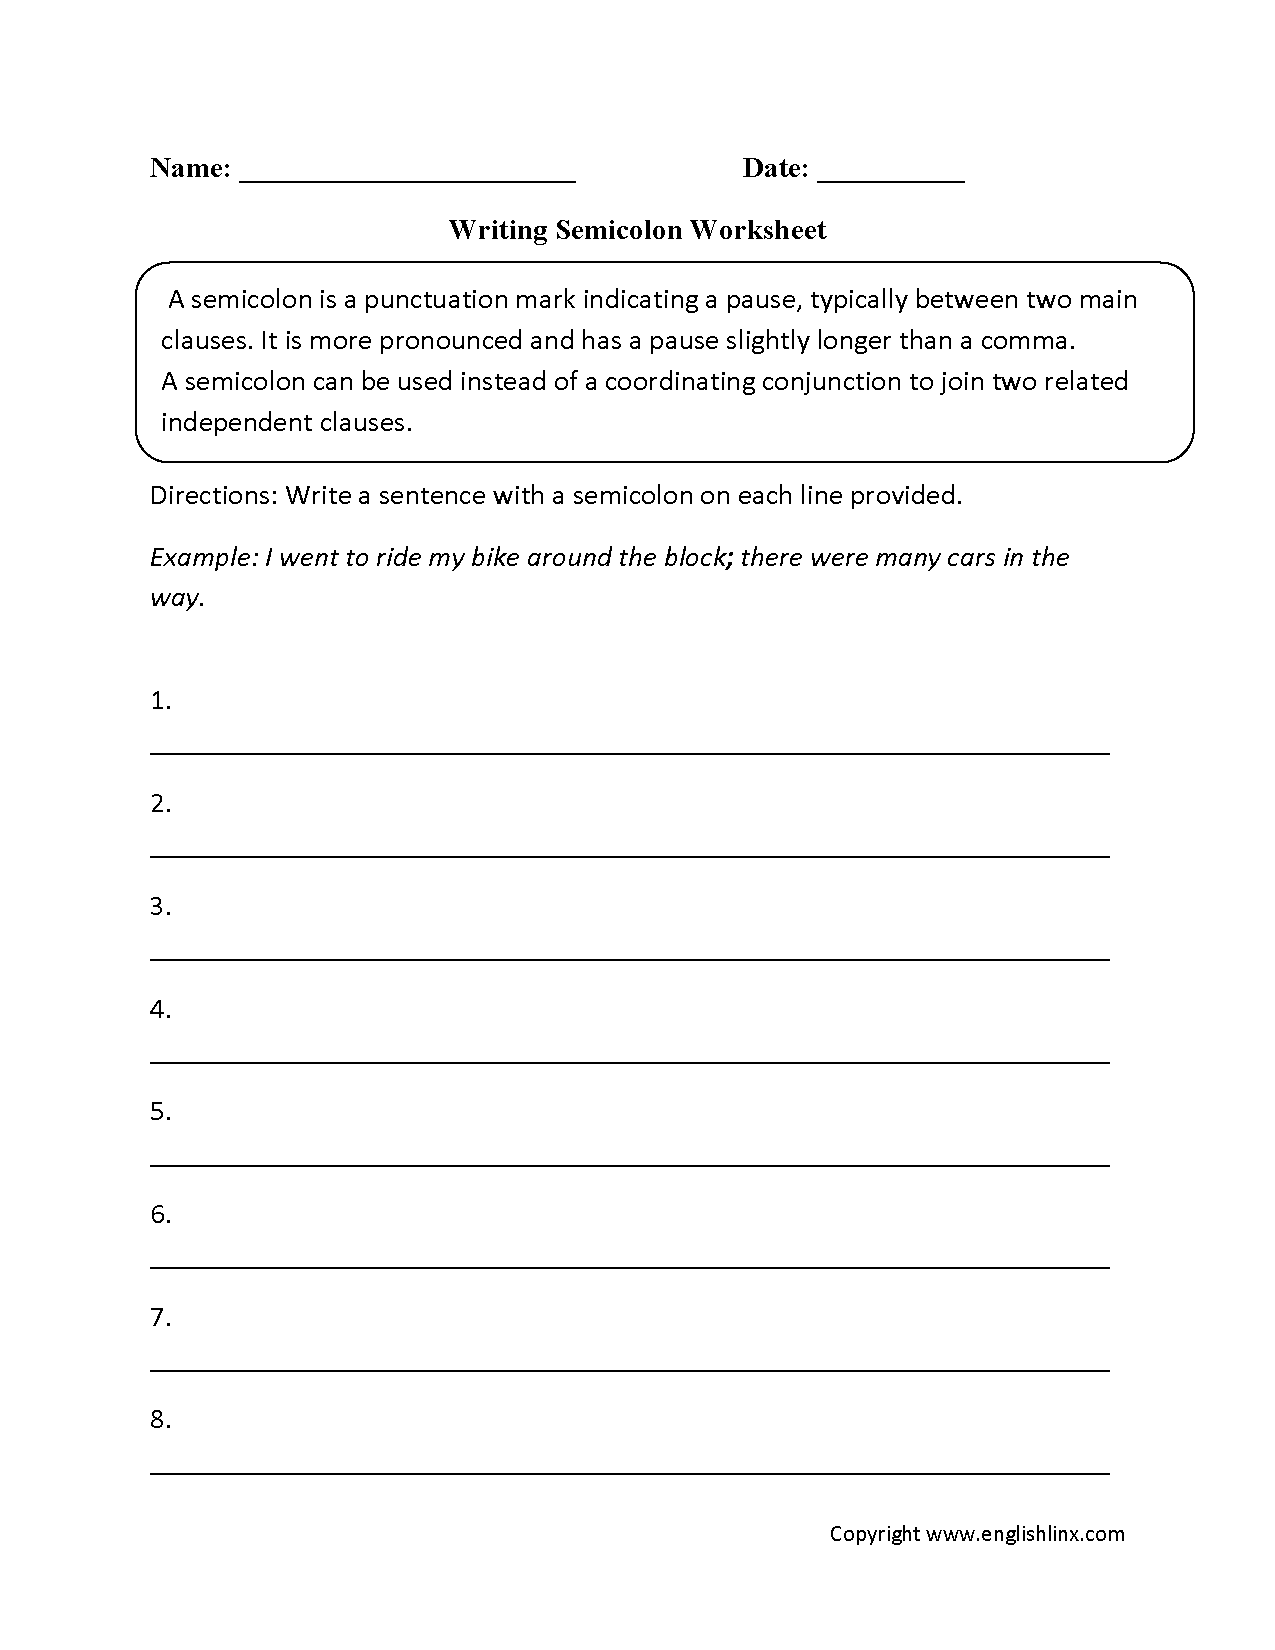 punctuation-worksheets-semicolon-worksheets